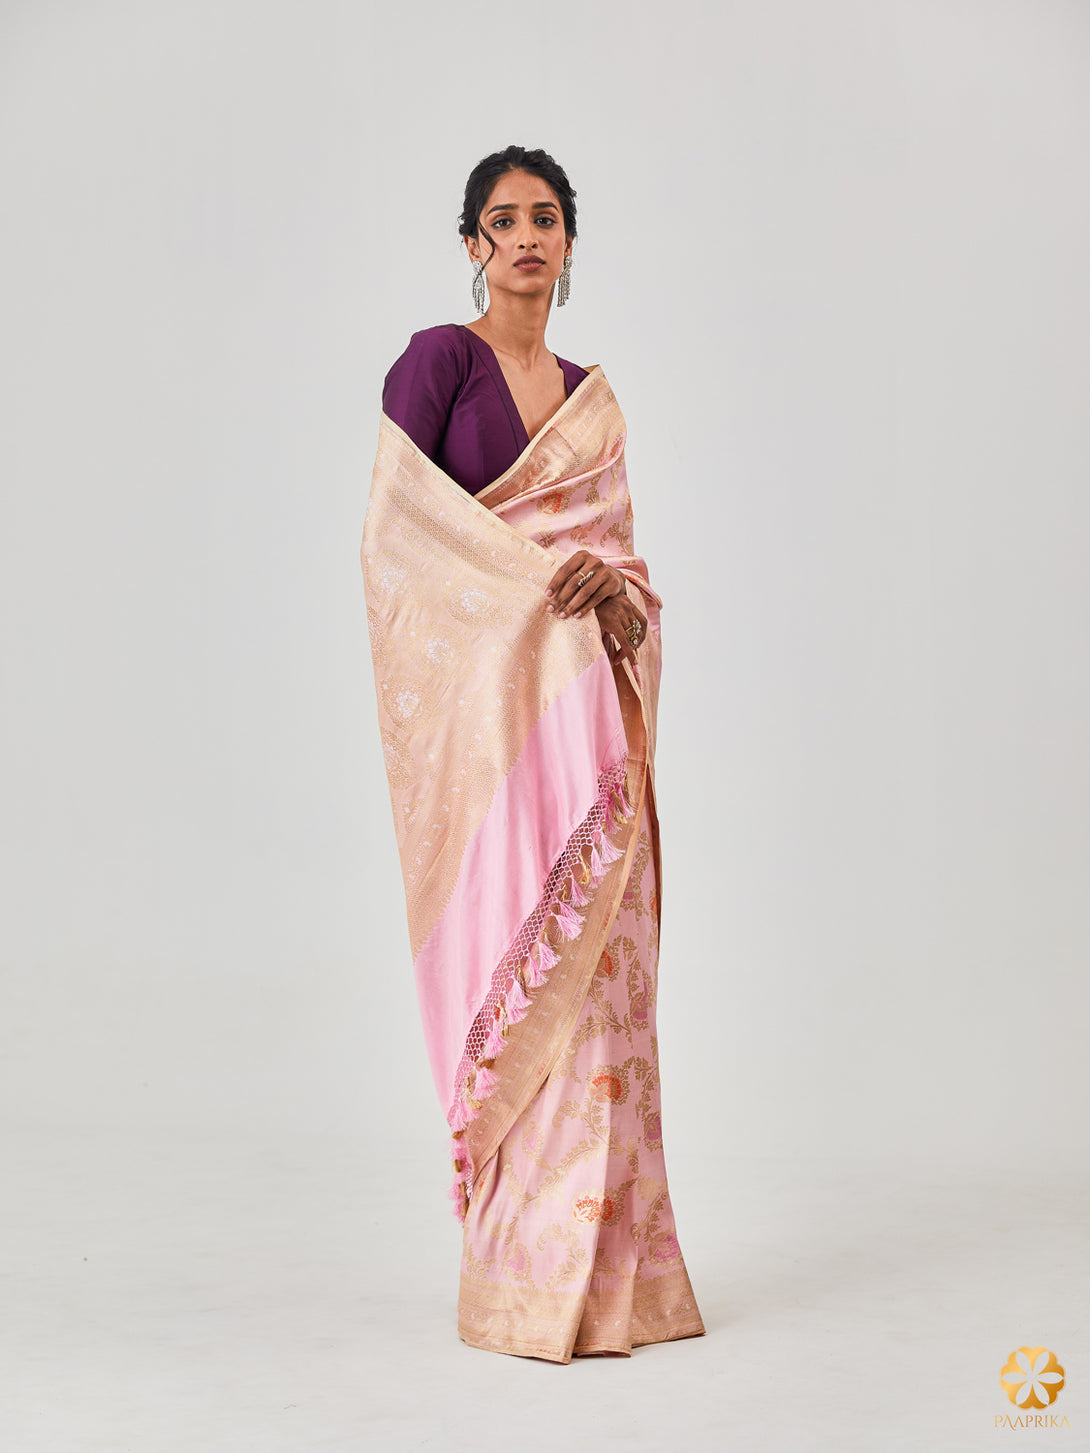 A Stylish Woman Wearing Enchanting Pastel Rose Banarasi Saree with Color Popping Minakari - Effortless Beauty and Opulence.